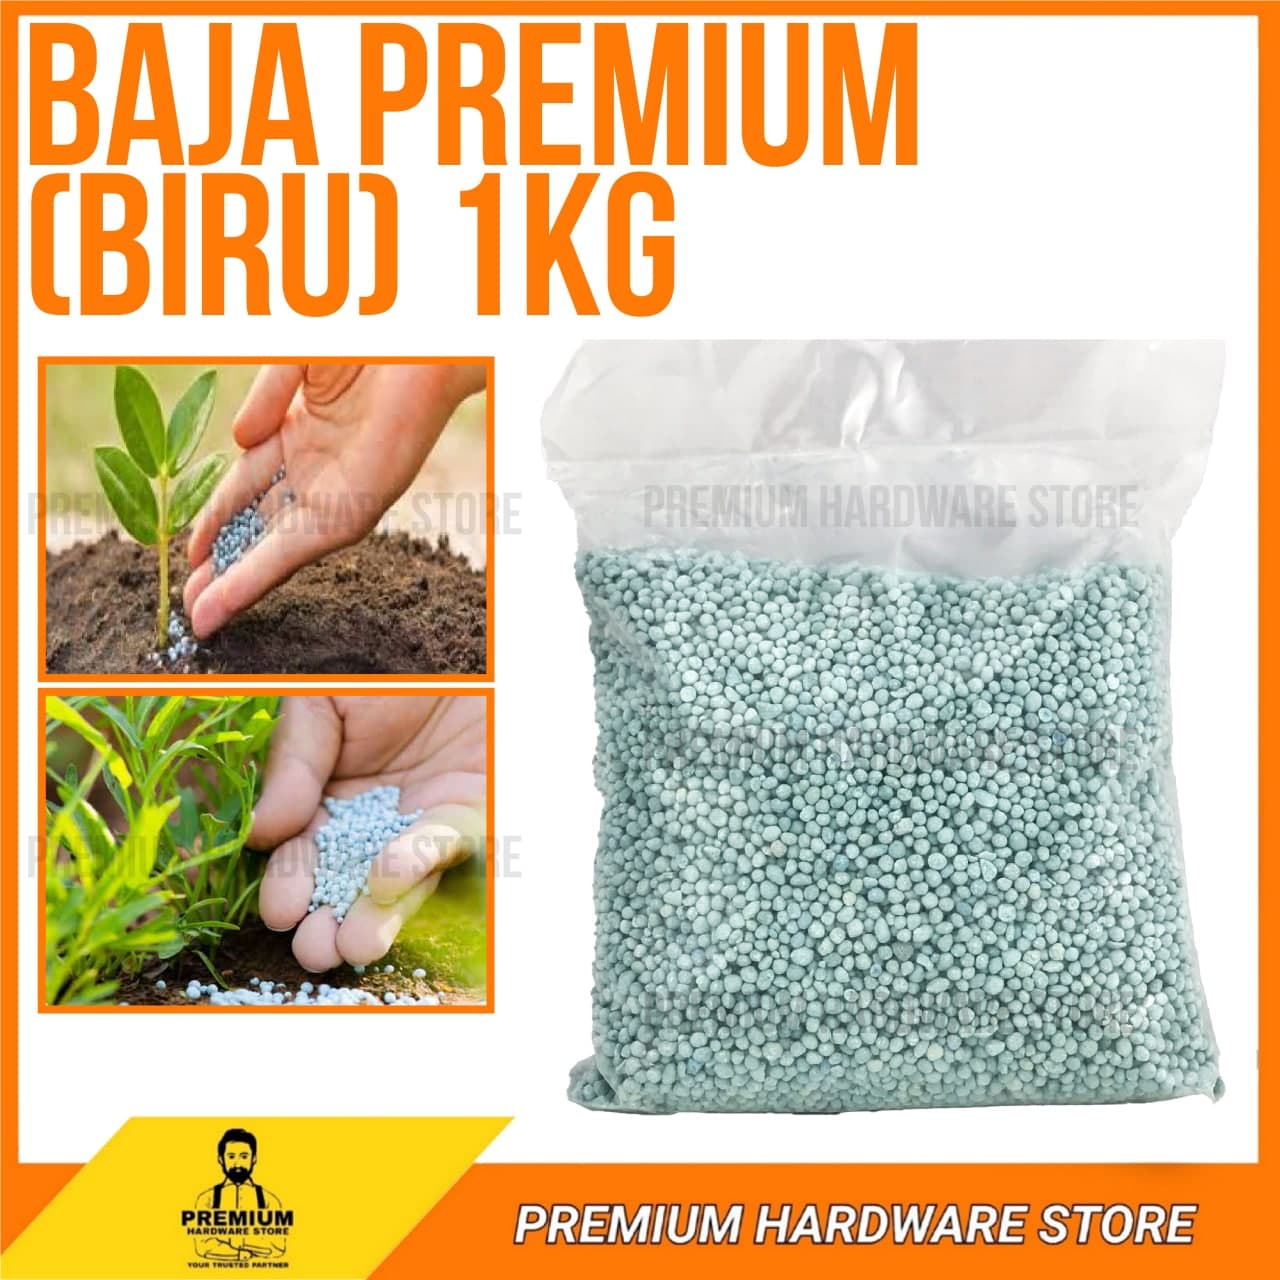 Buy Baja Premium Biru 12 12 17 1kg Seetracker Malaysia